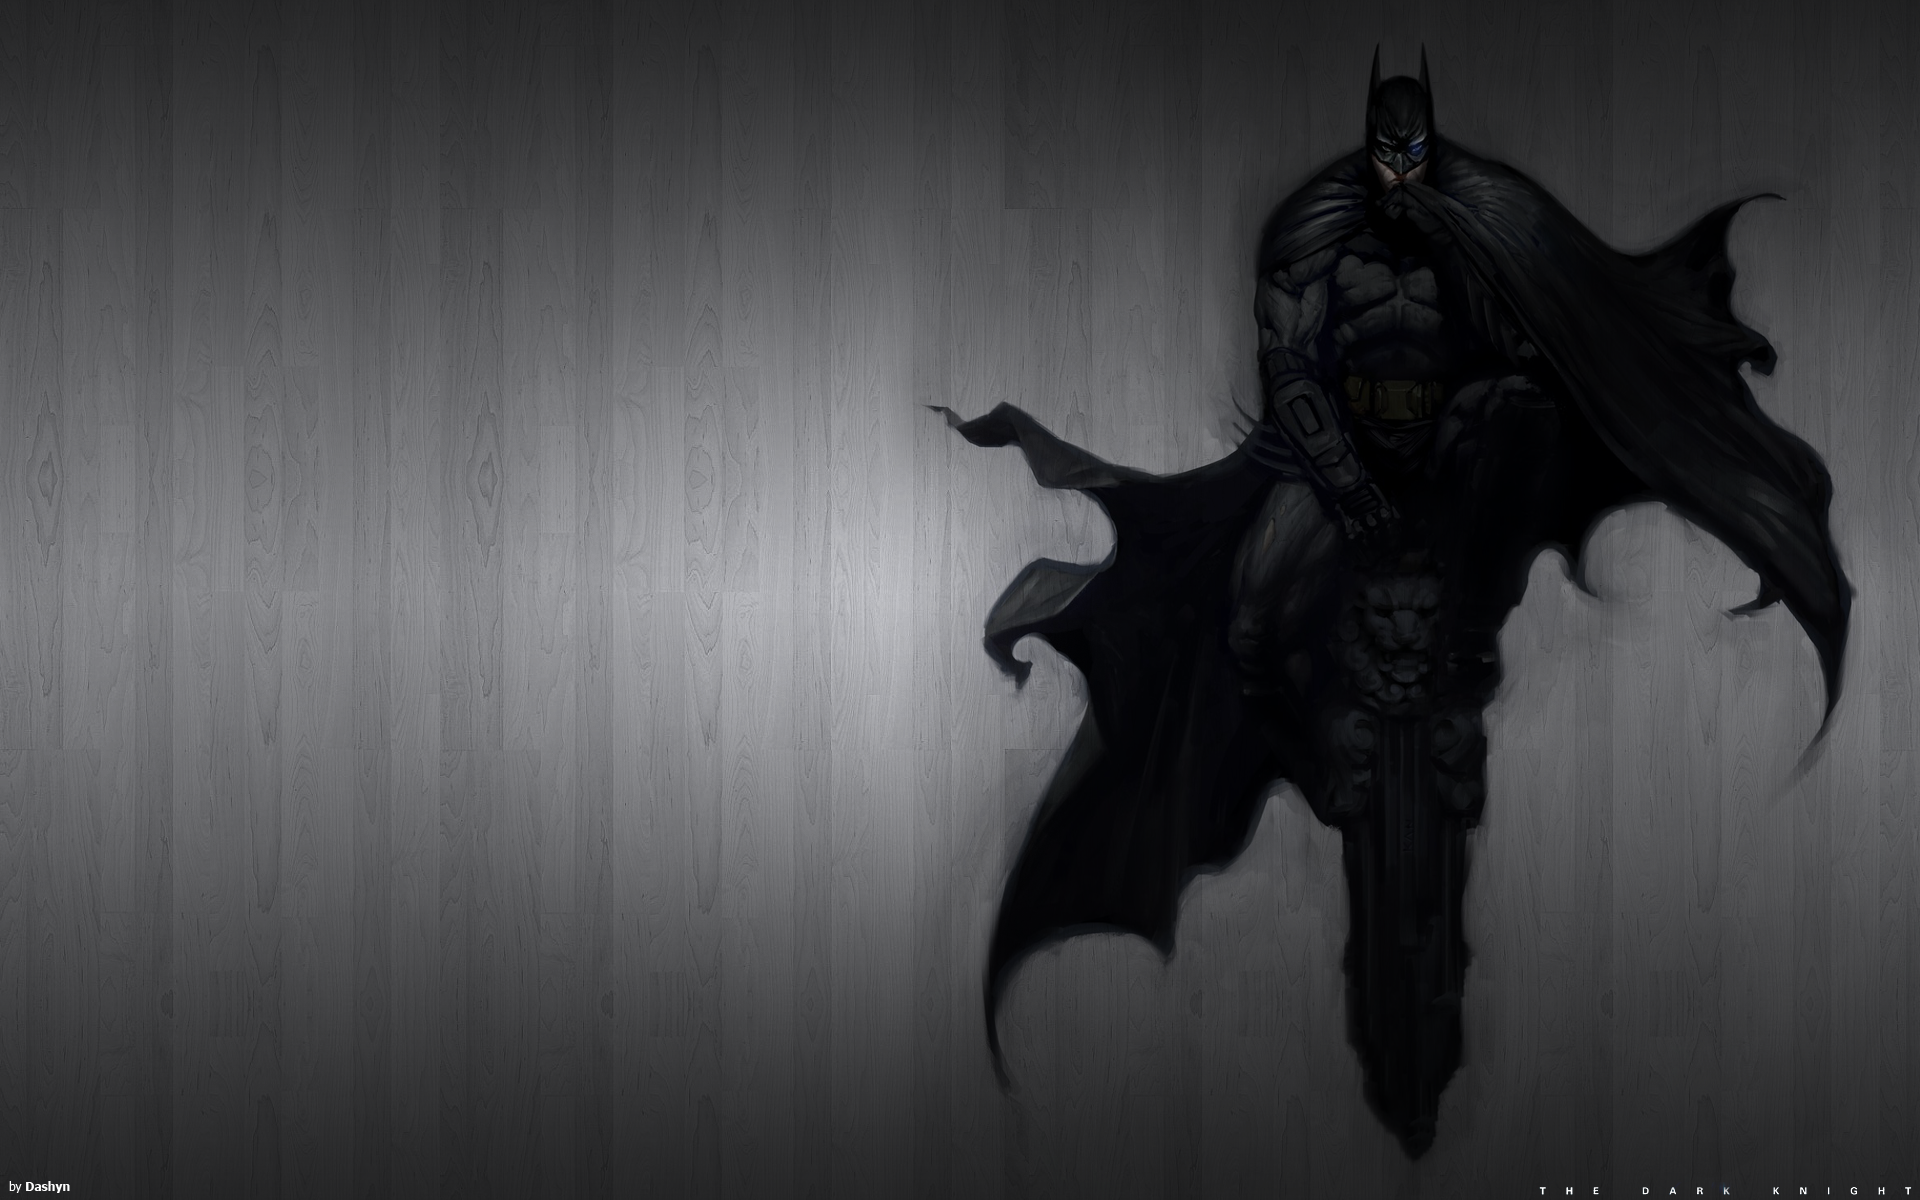 Wallpaper - Batman Arkham City by Dashyn on DeviantArt